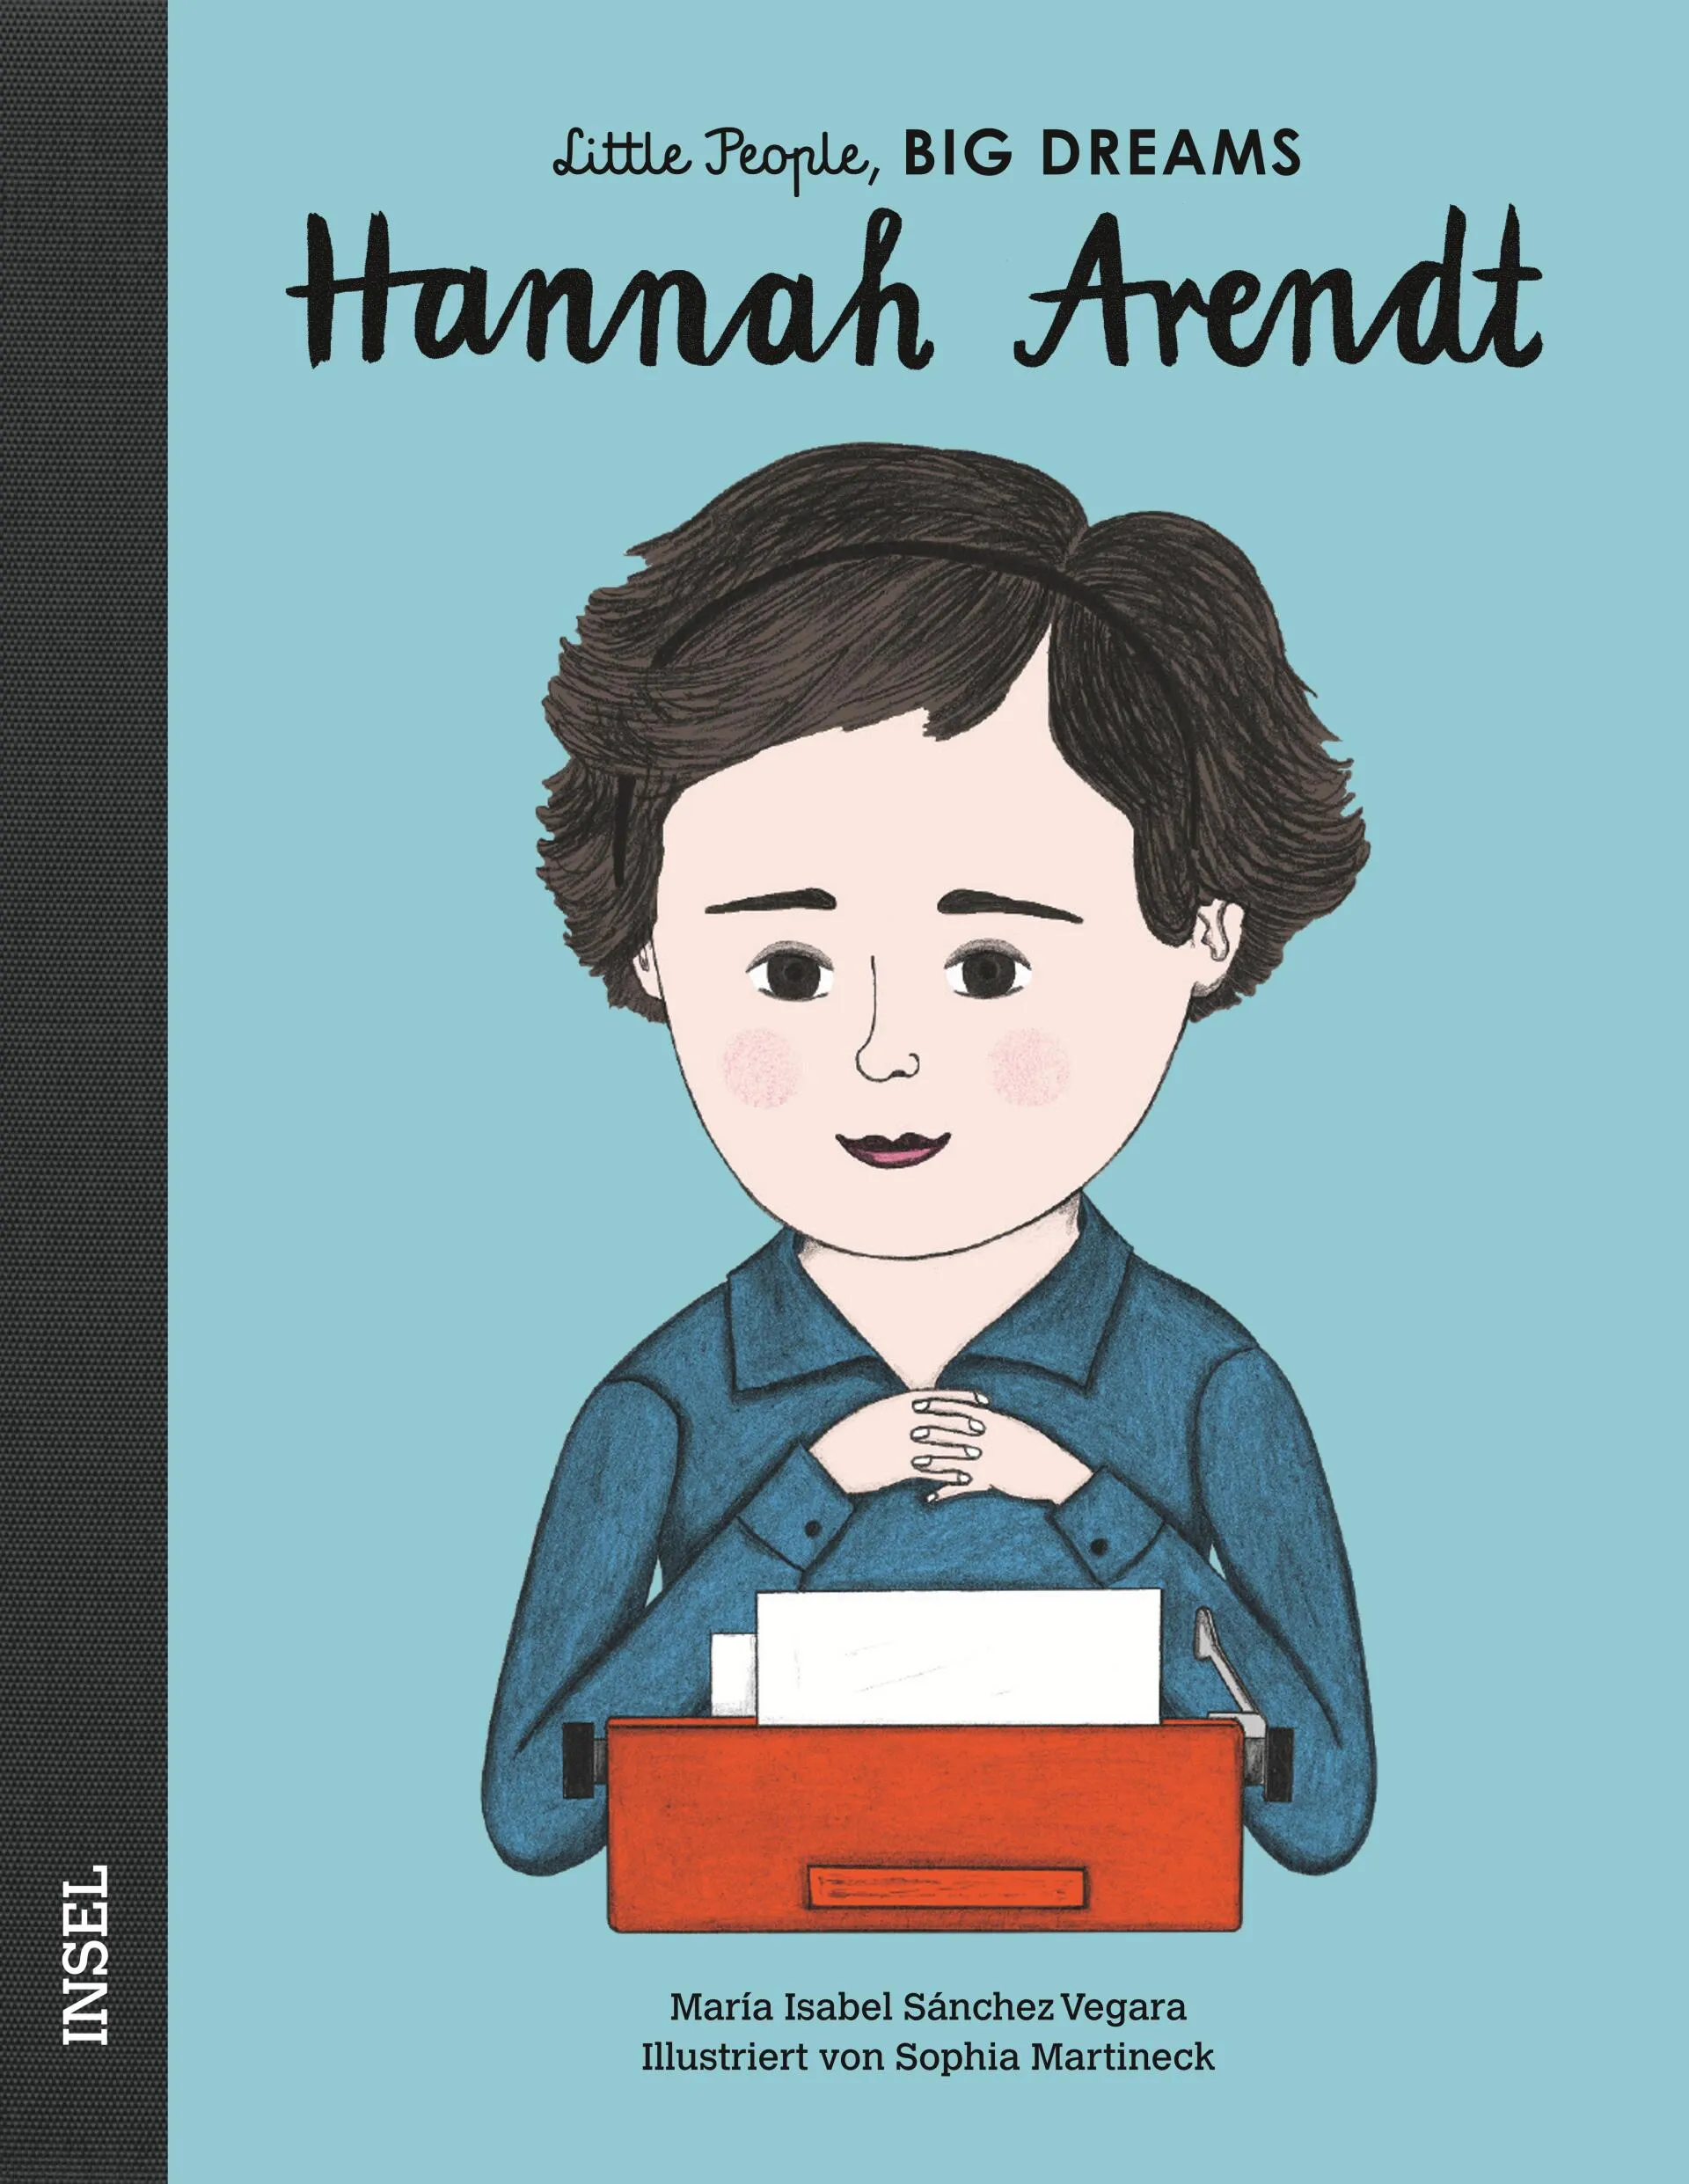 Hannah Arendt - Little People, Big Dreams